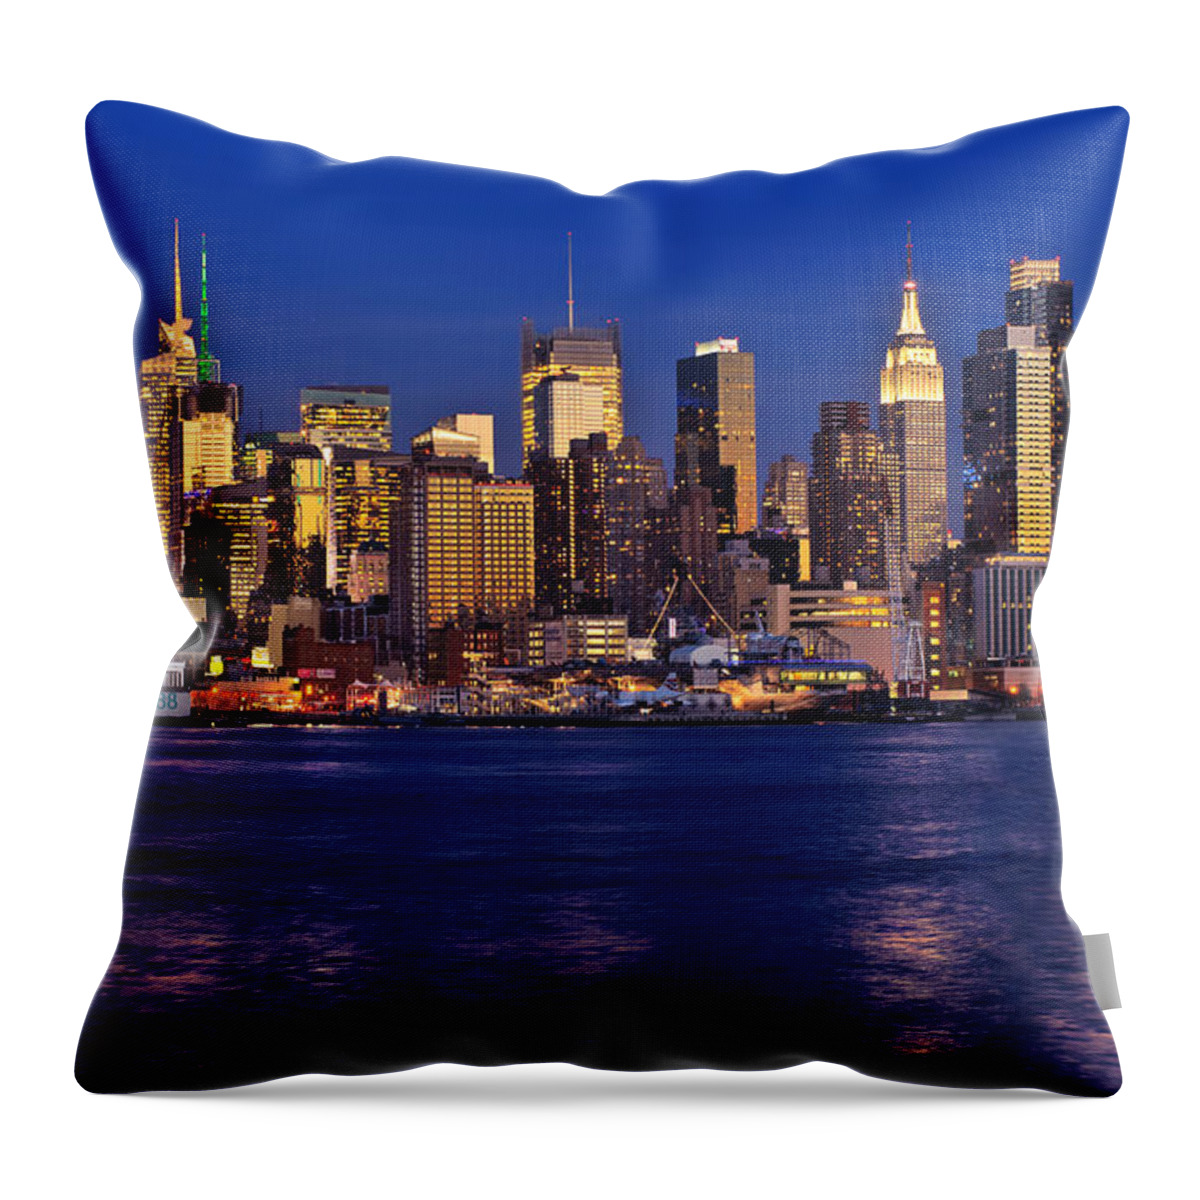 Best New York Skyline Photos Throw Pillow featuring the photograph NYC City Skyline Across the Hudson by Mitchell R Grosky